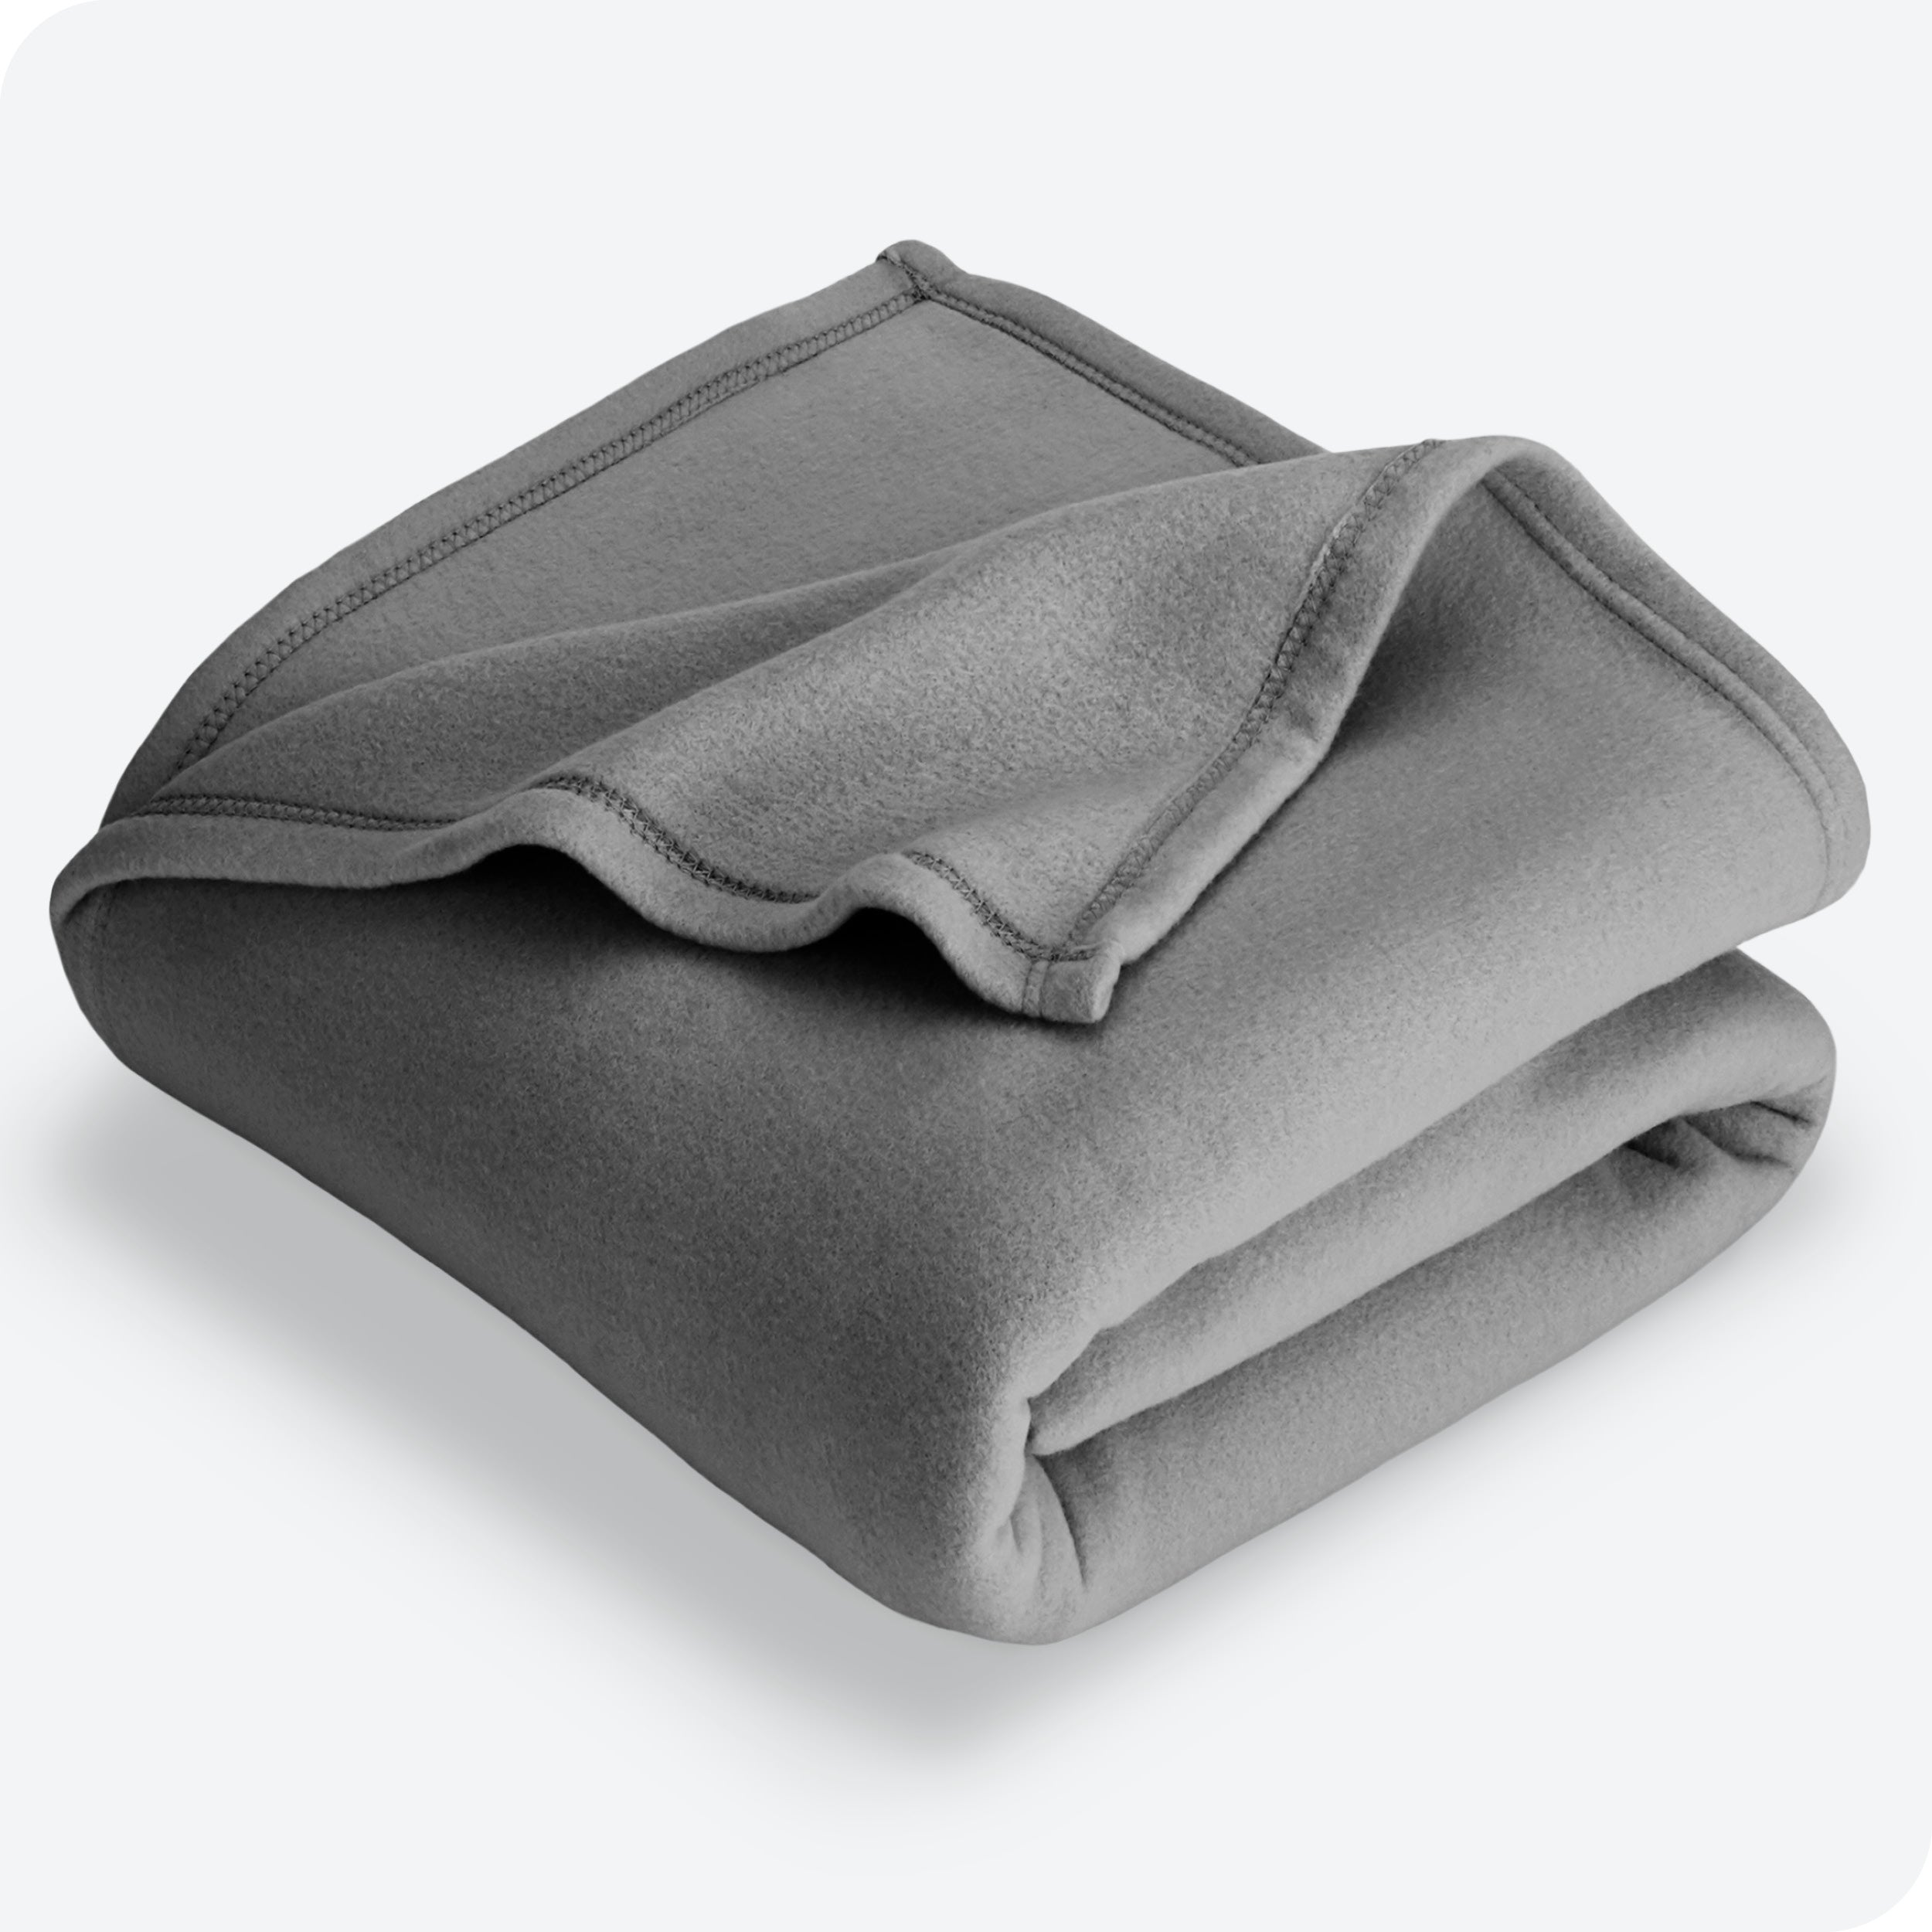 Grey polar fleece blanket folded with 1 corner folded back